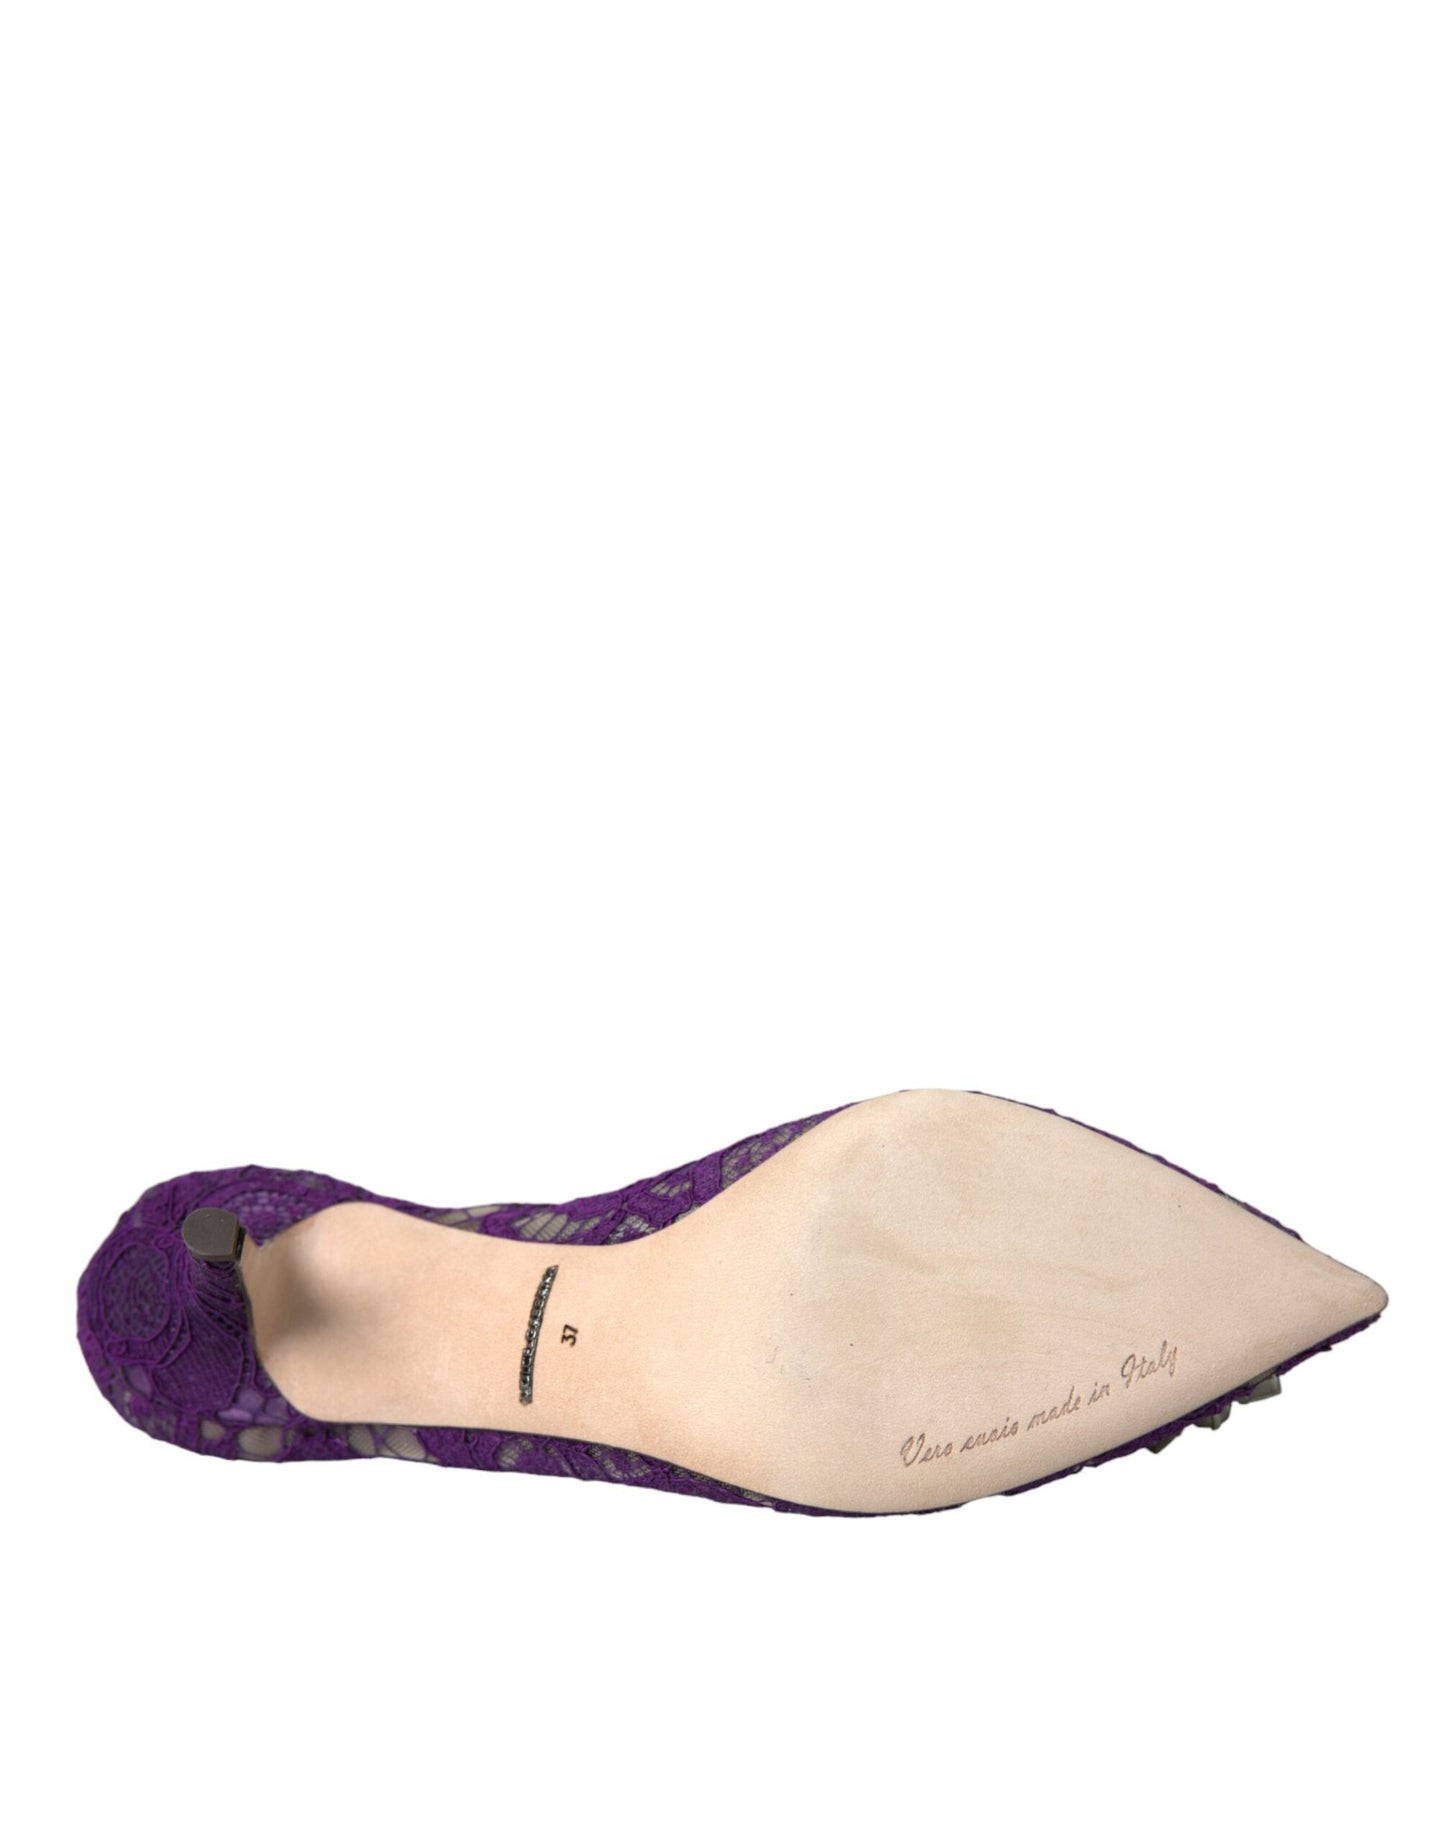 Purple Taormina Lace Crystal Heel Pumps Shoes